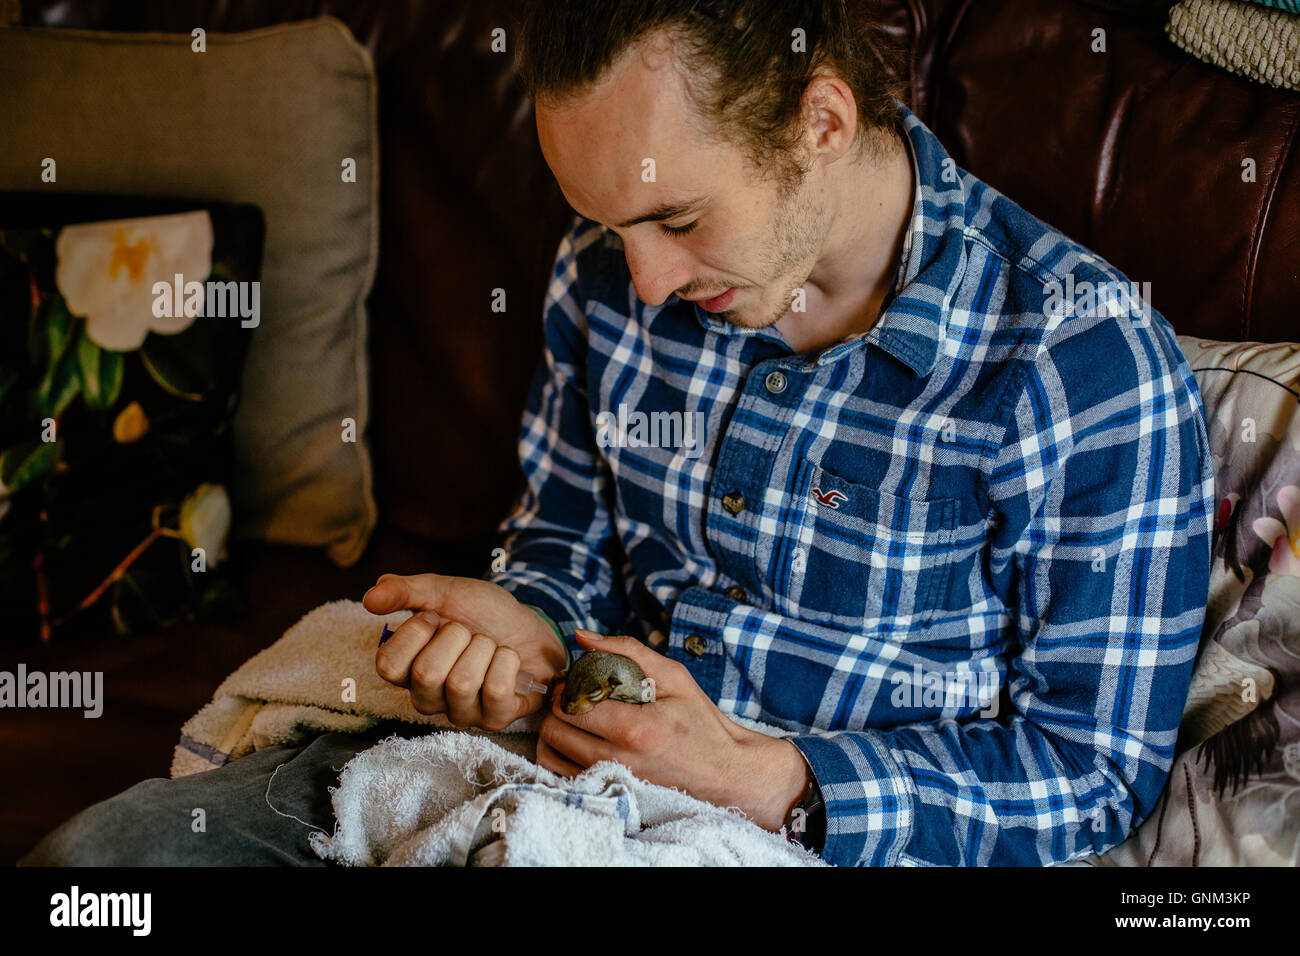 Man with tattoos feeding three week old baby squirrel Stock Photo